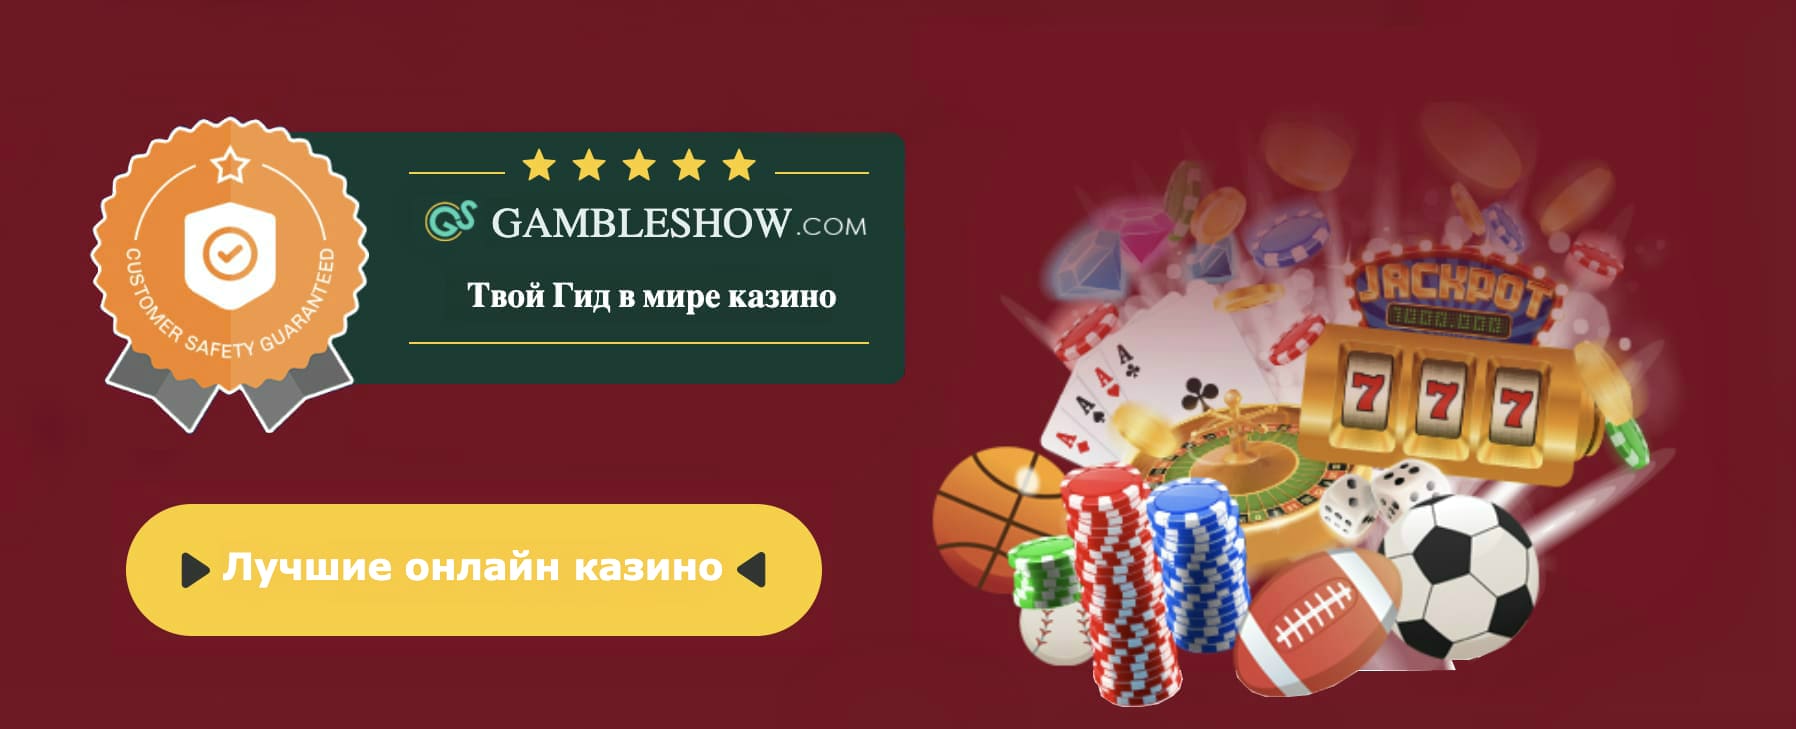 Online casino malta